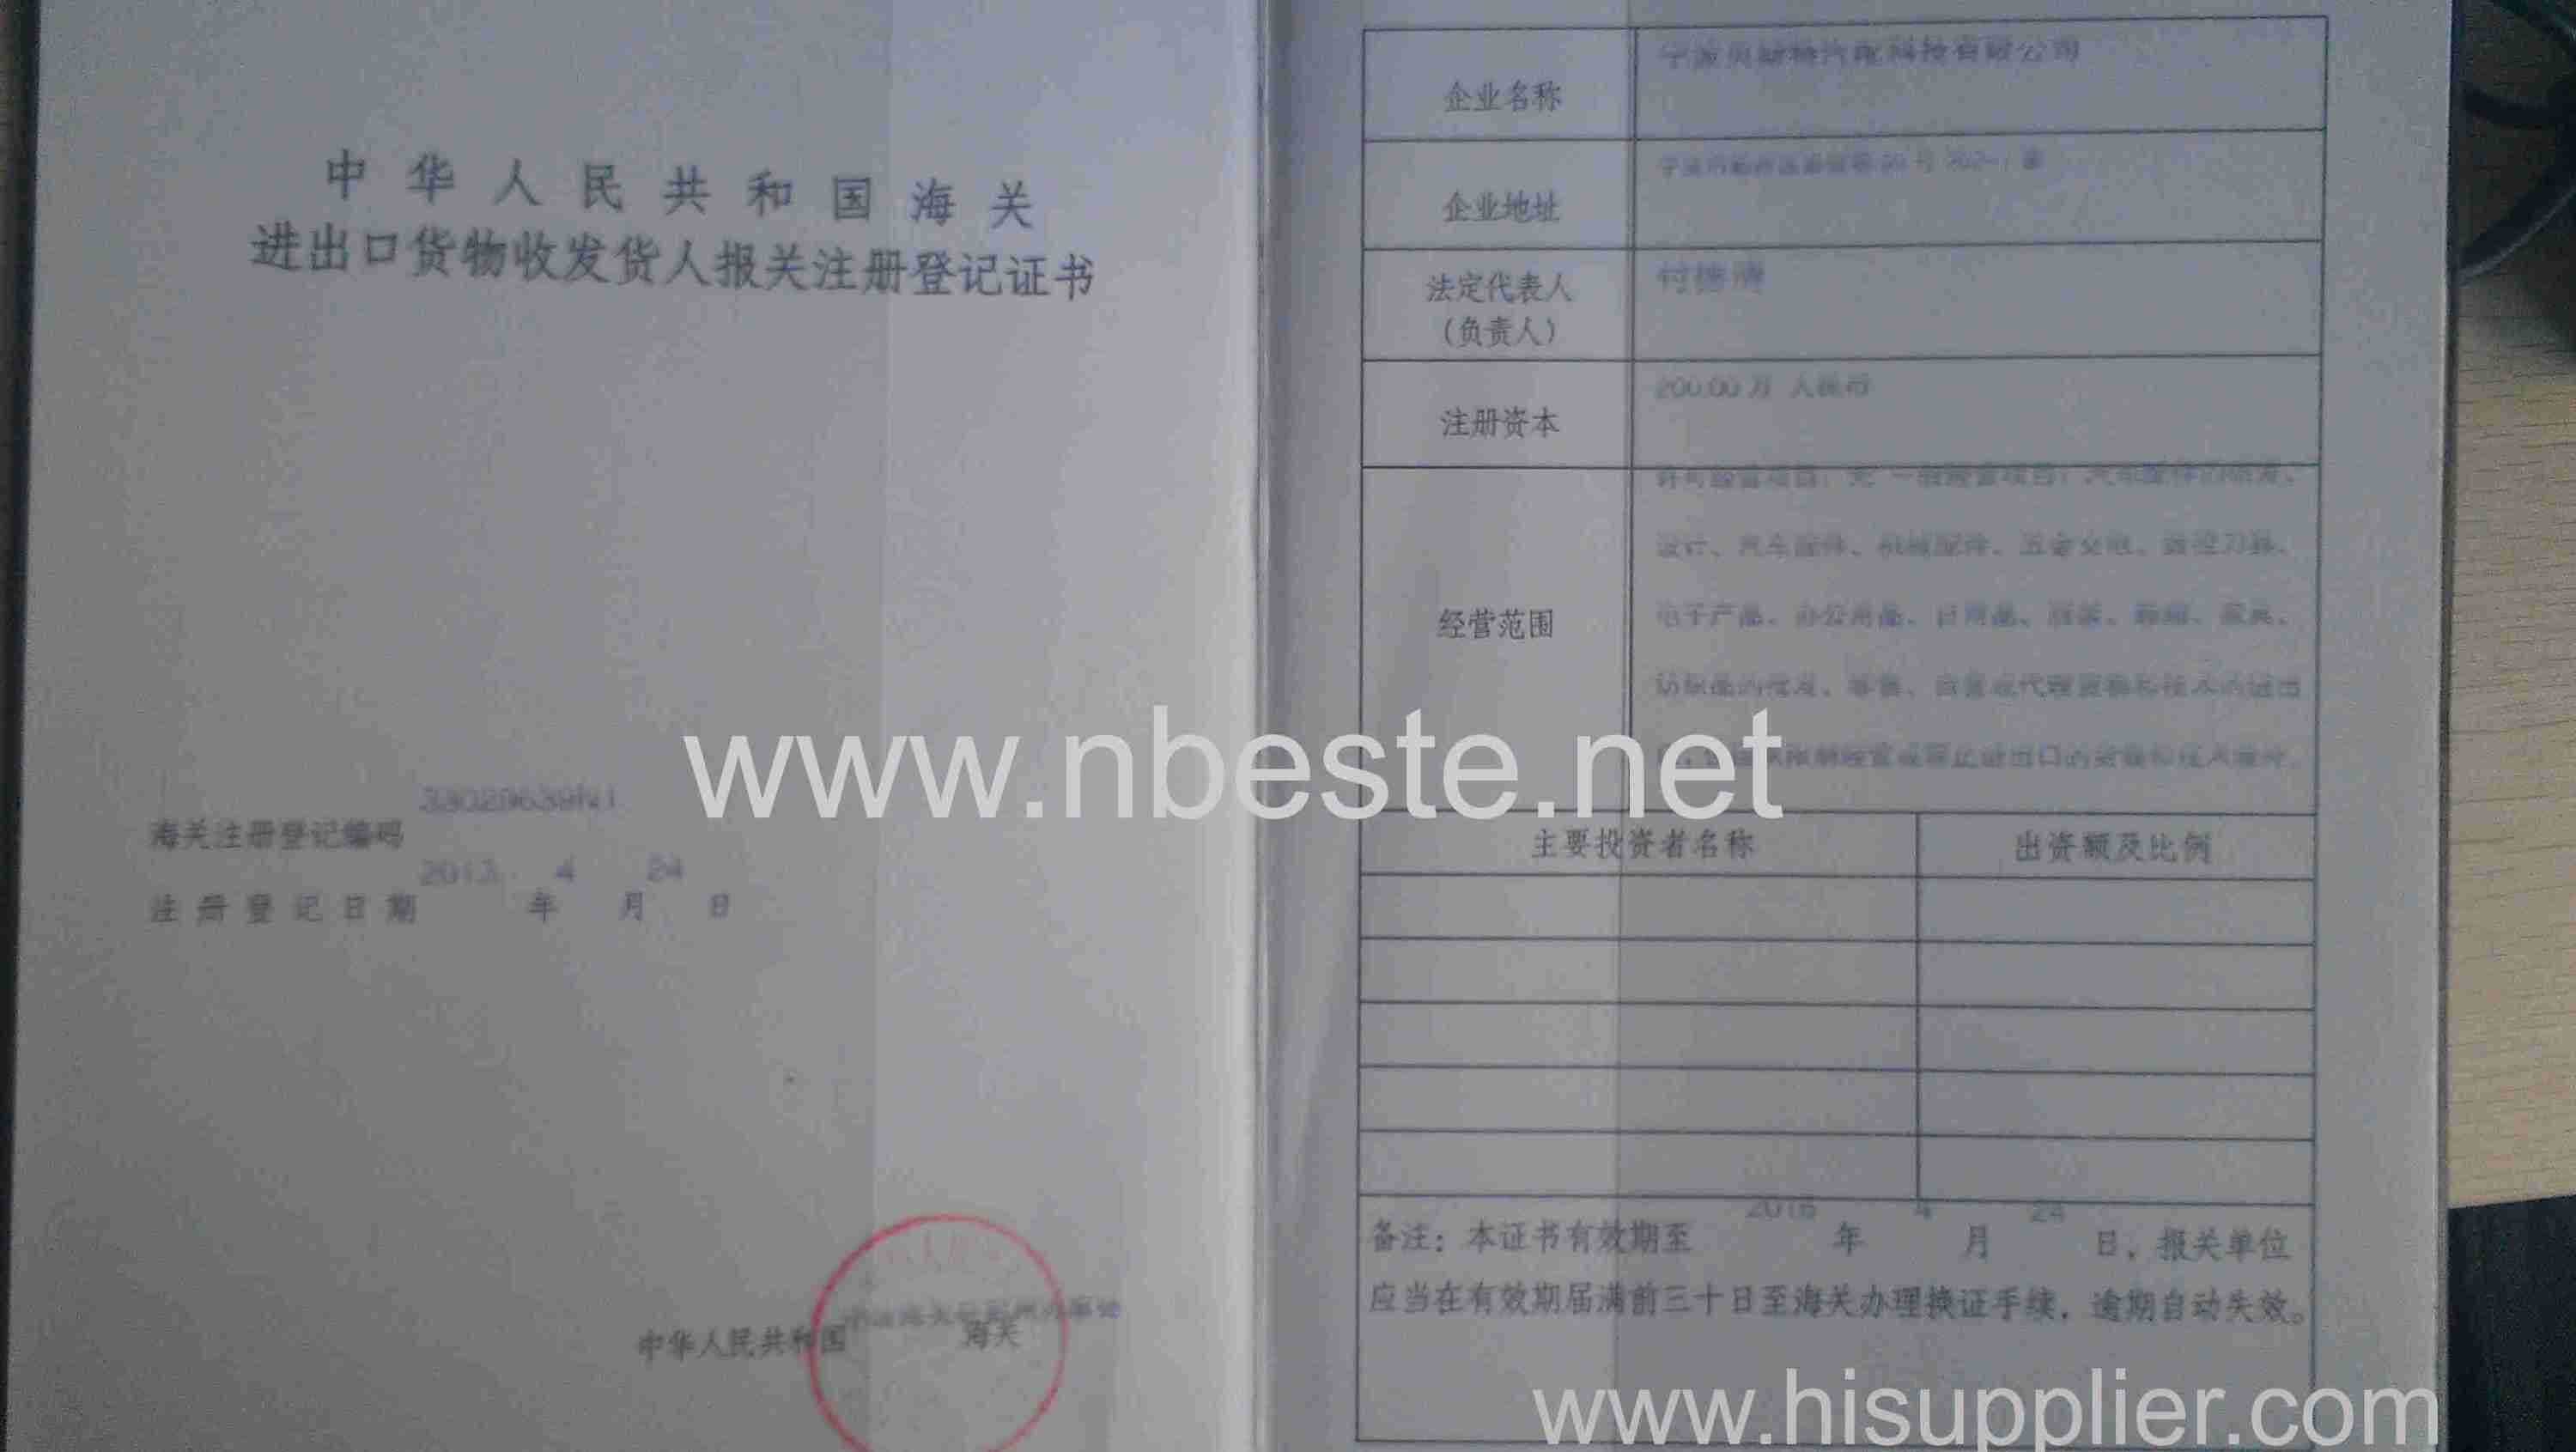 Custom Registeration Certificate